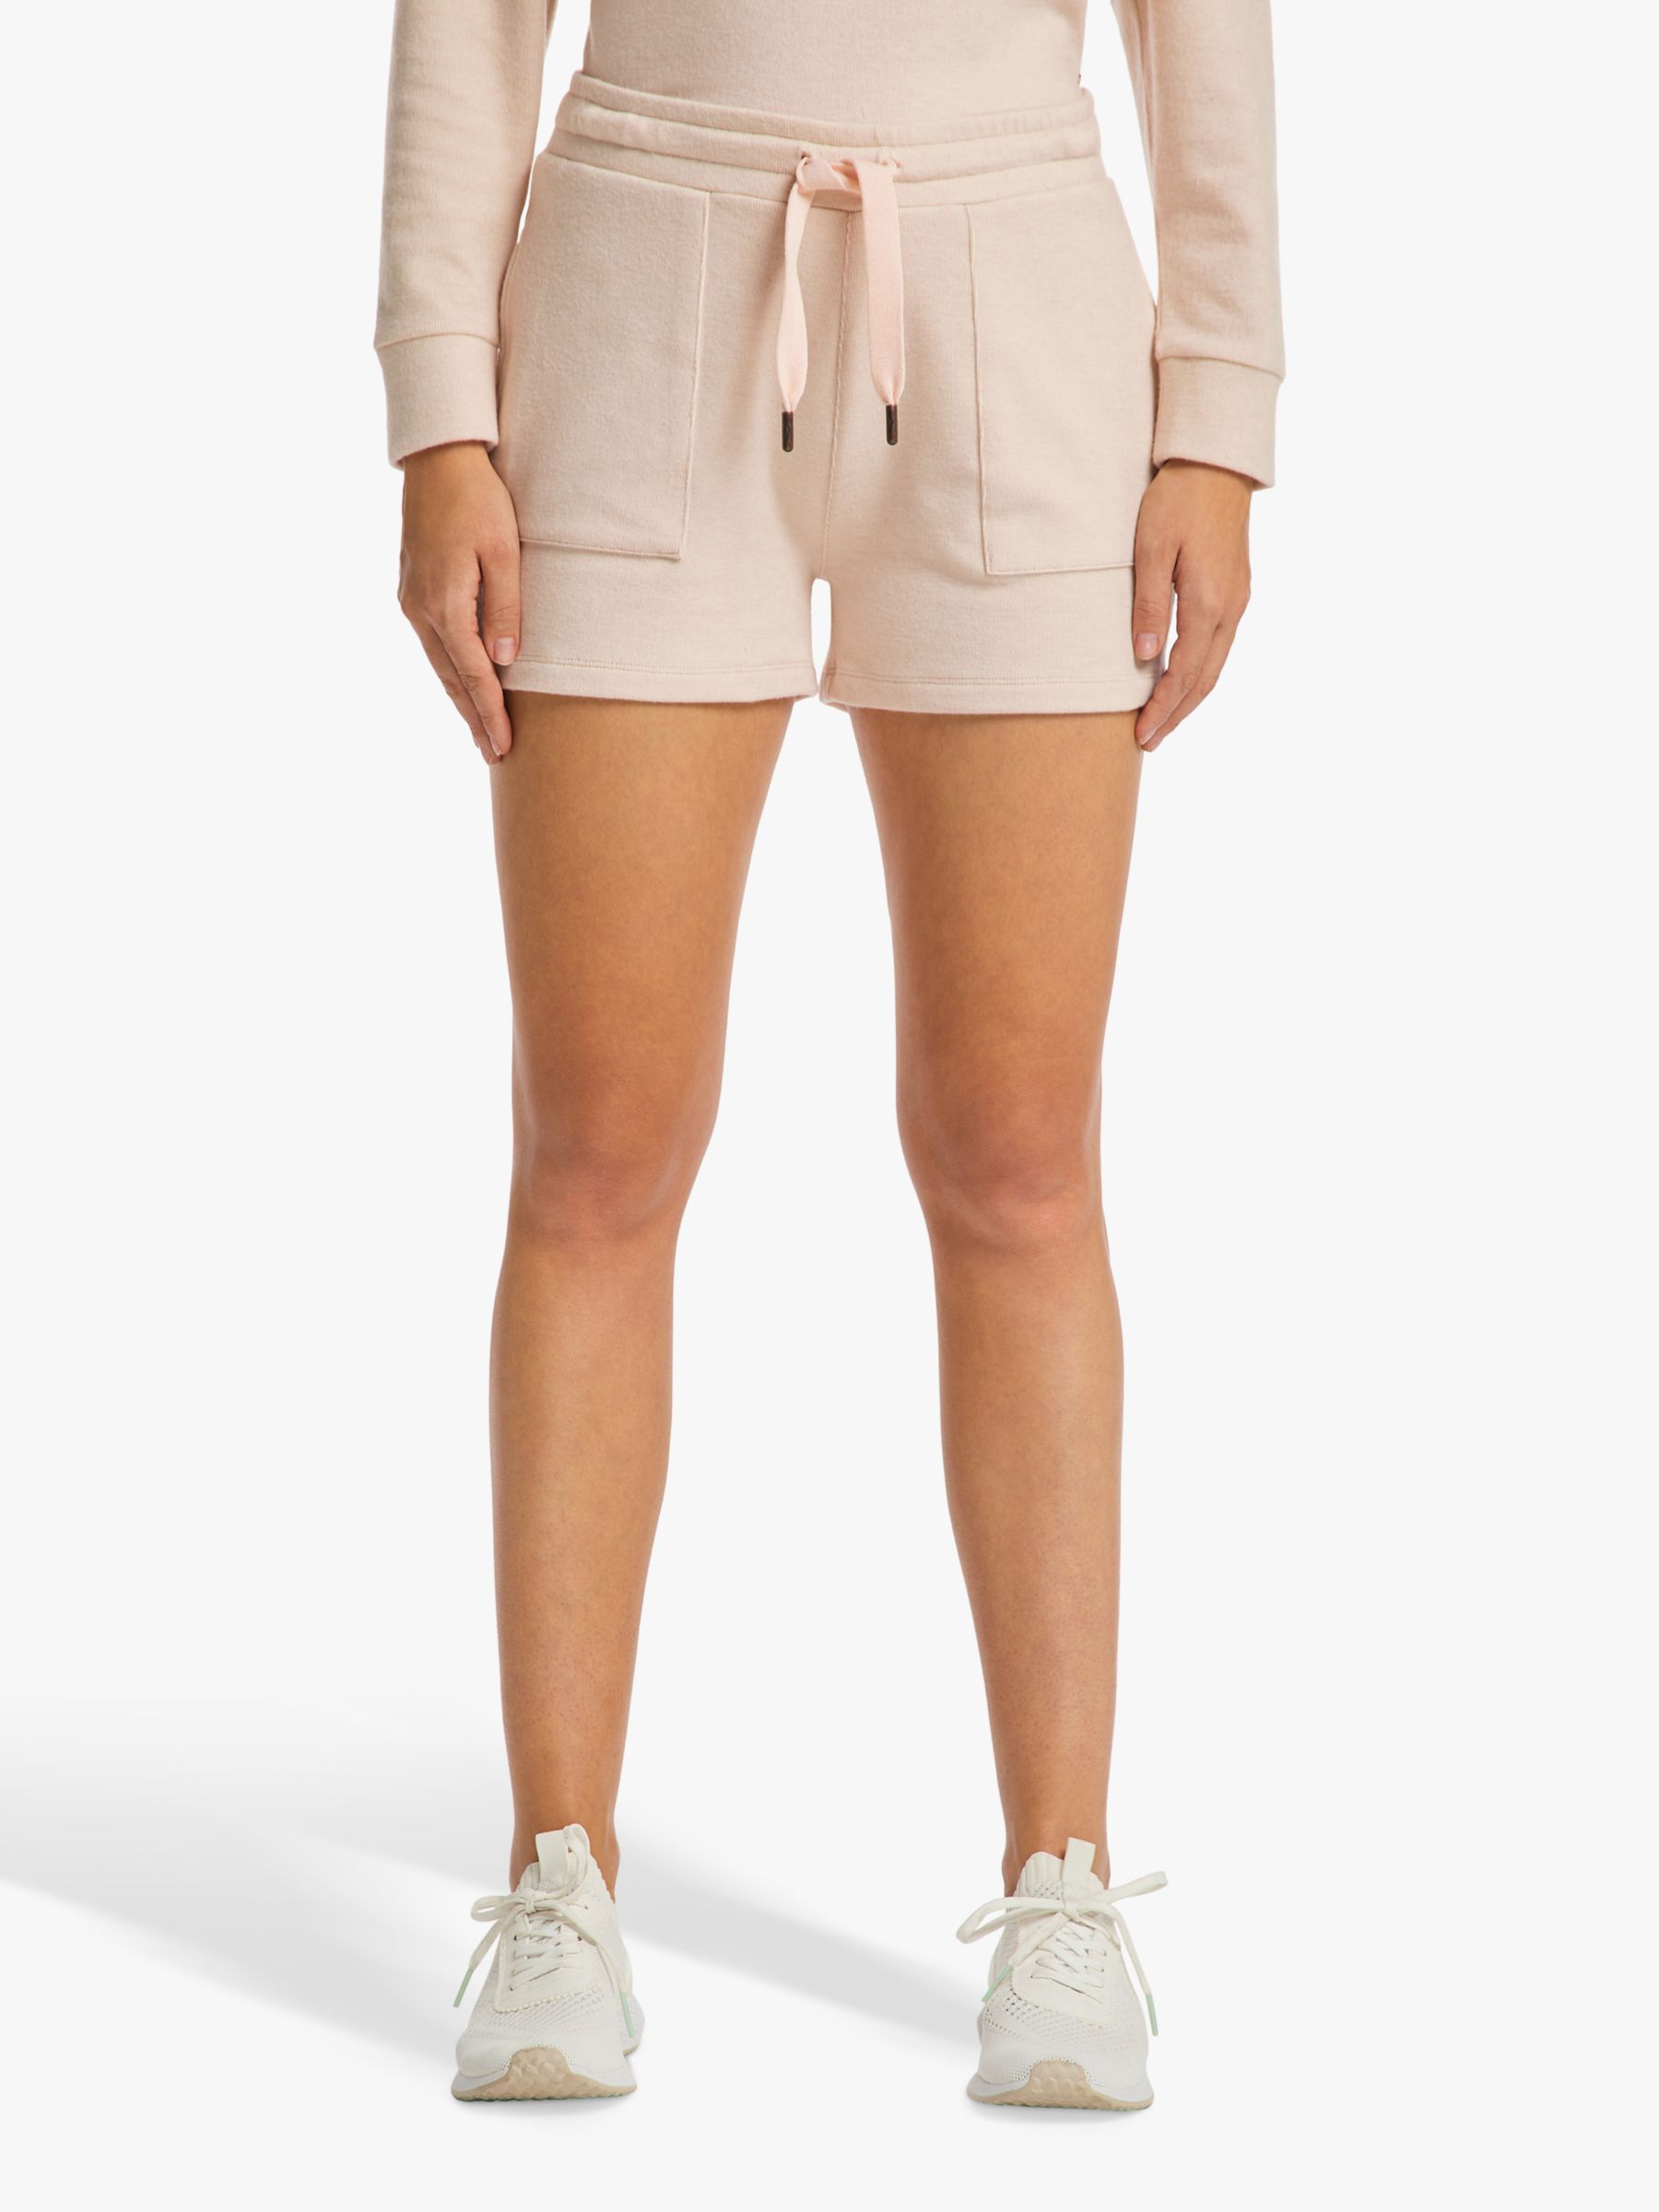 A3 Denim Women's Plus Size Fray Hem Bermuda Shorts, Size: 16W, Blue